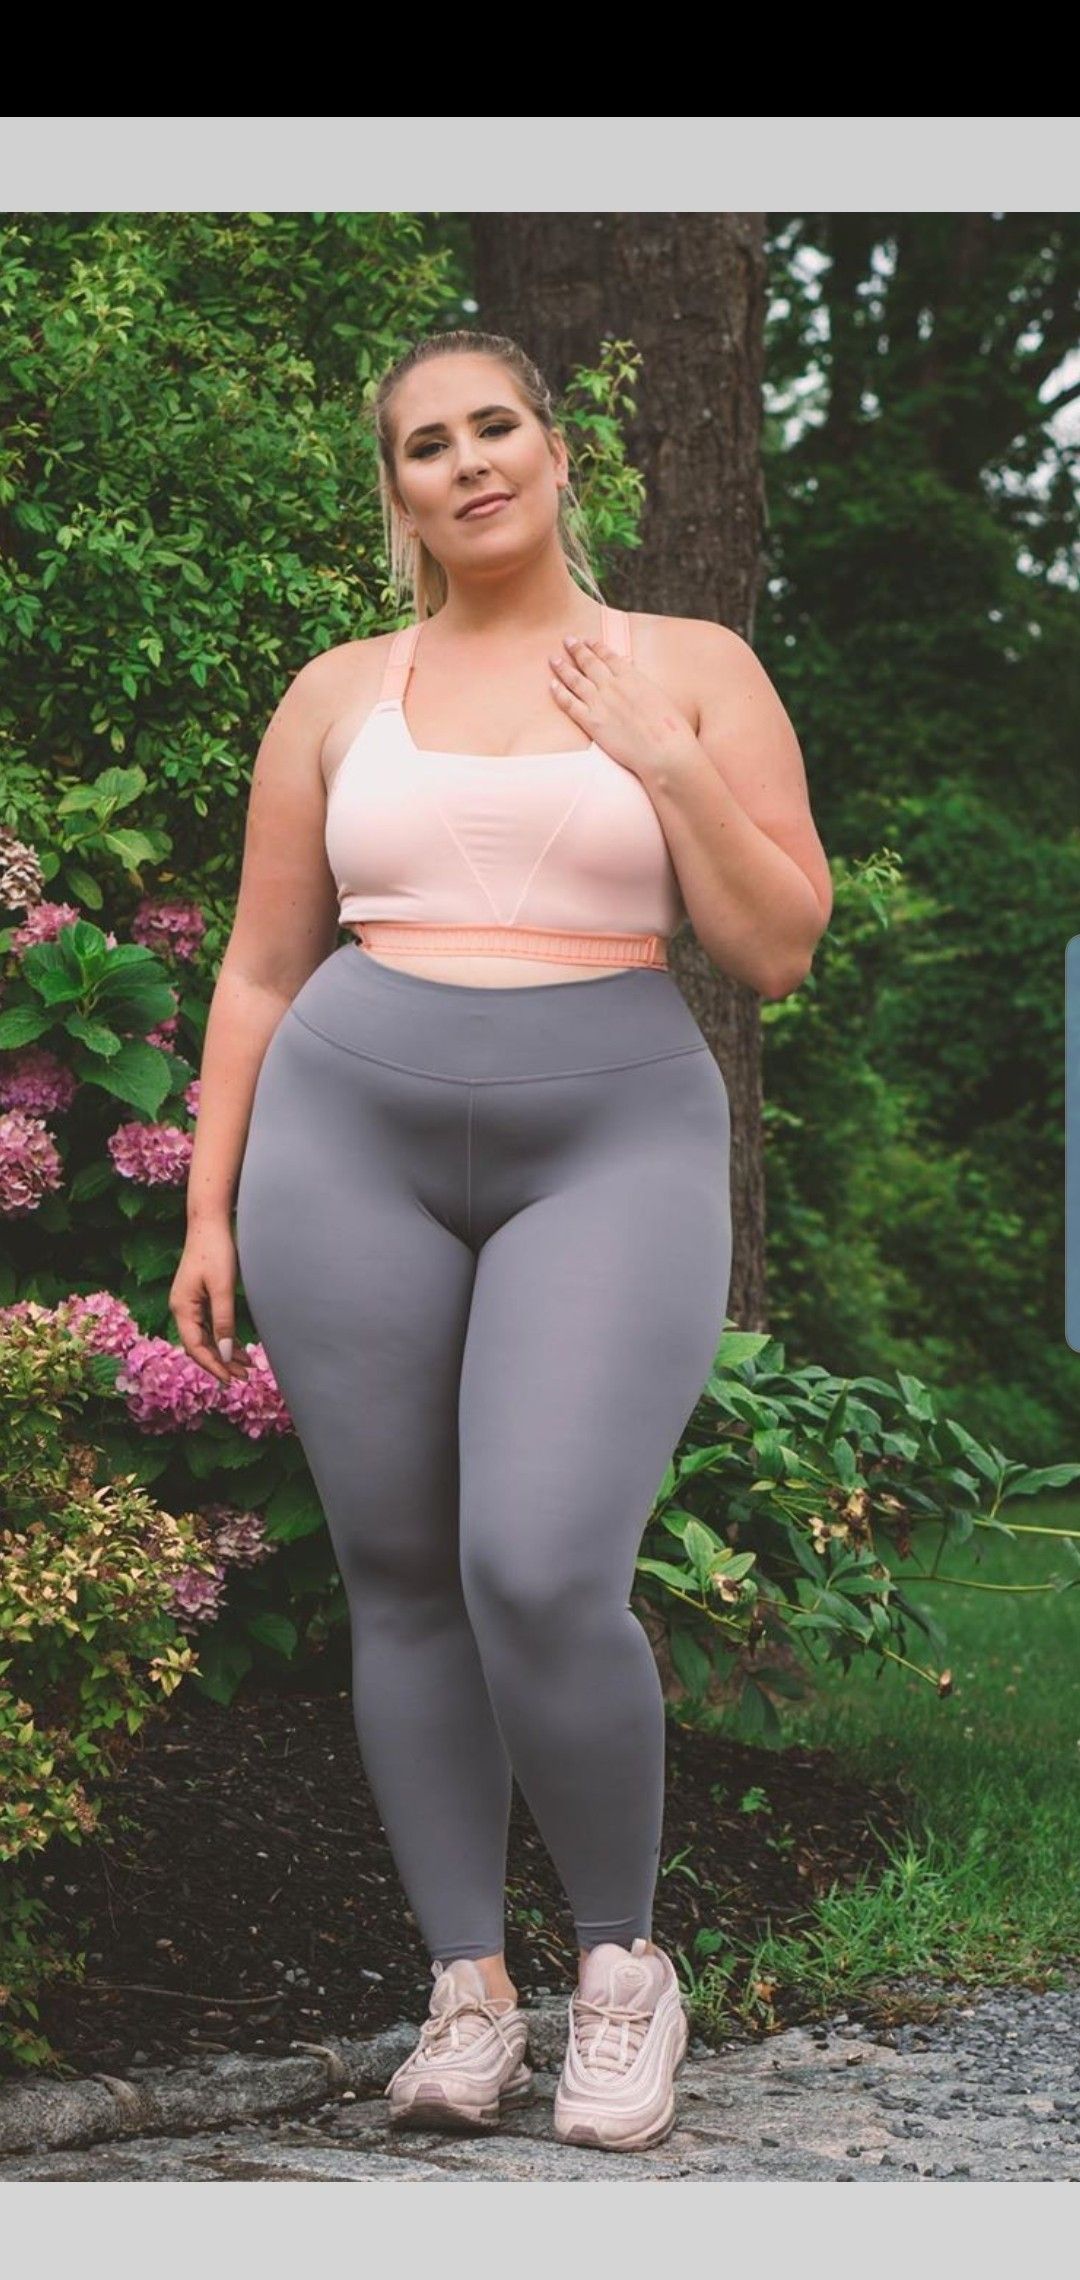 bill kulas share fat girl yoga pants photos